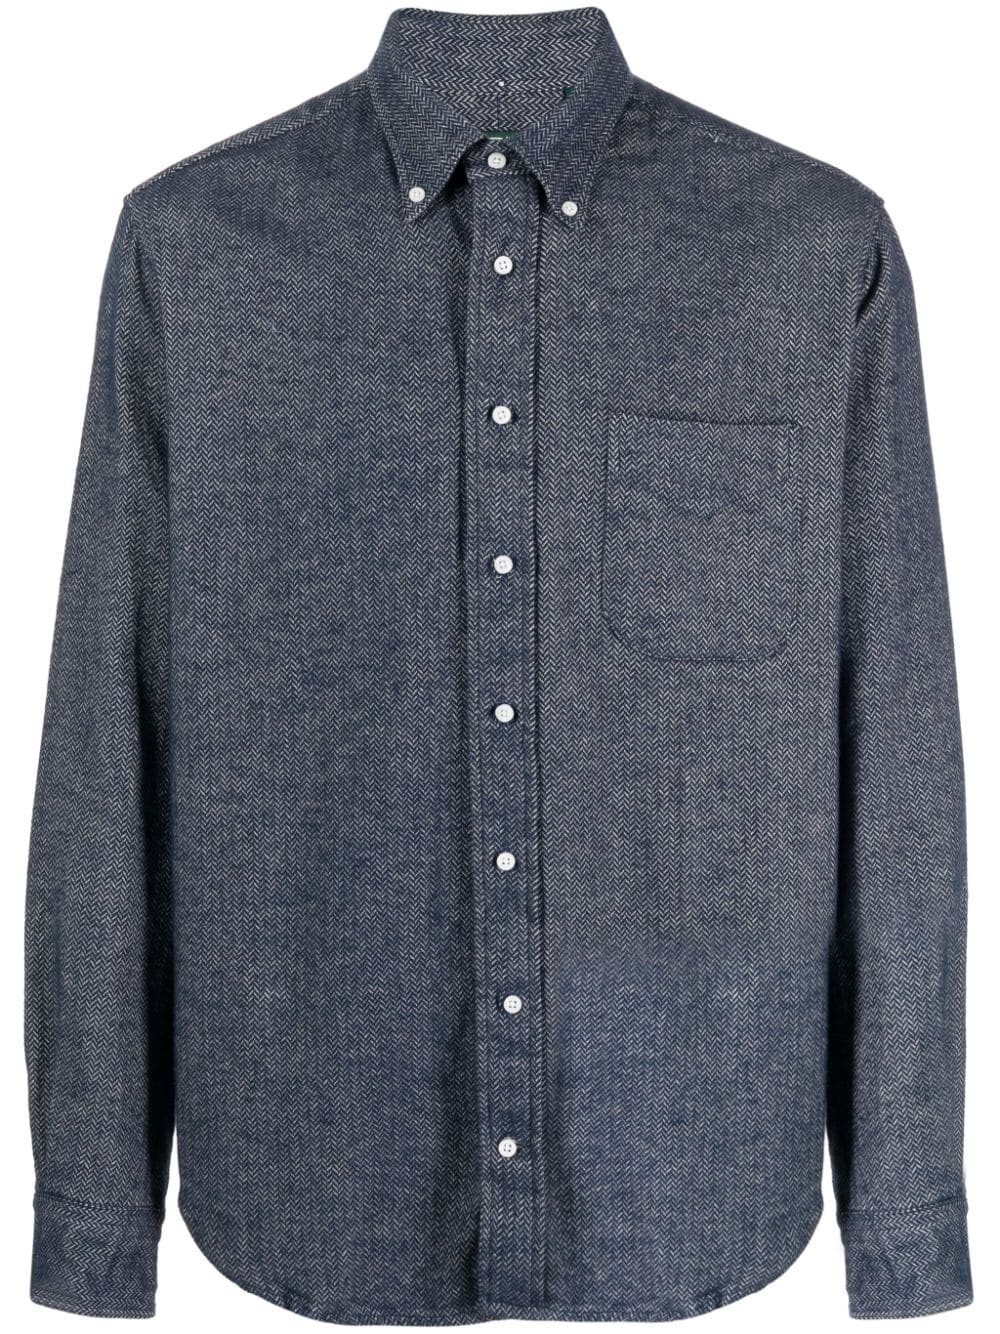 herringbone-pattern flannel shirt - 1